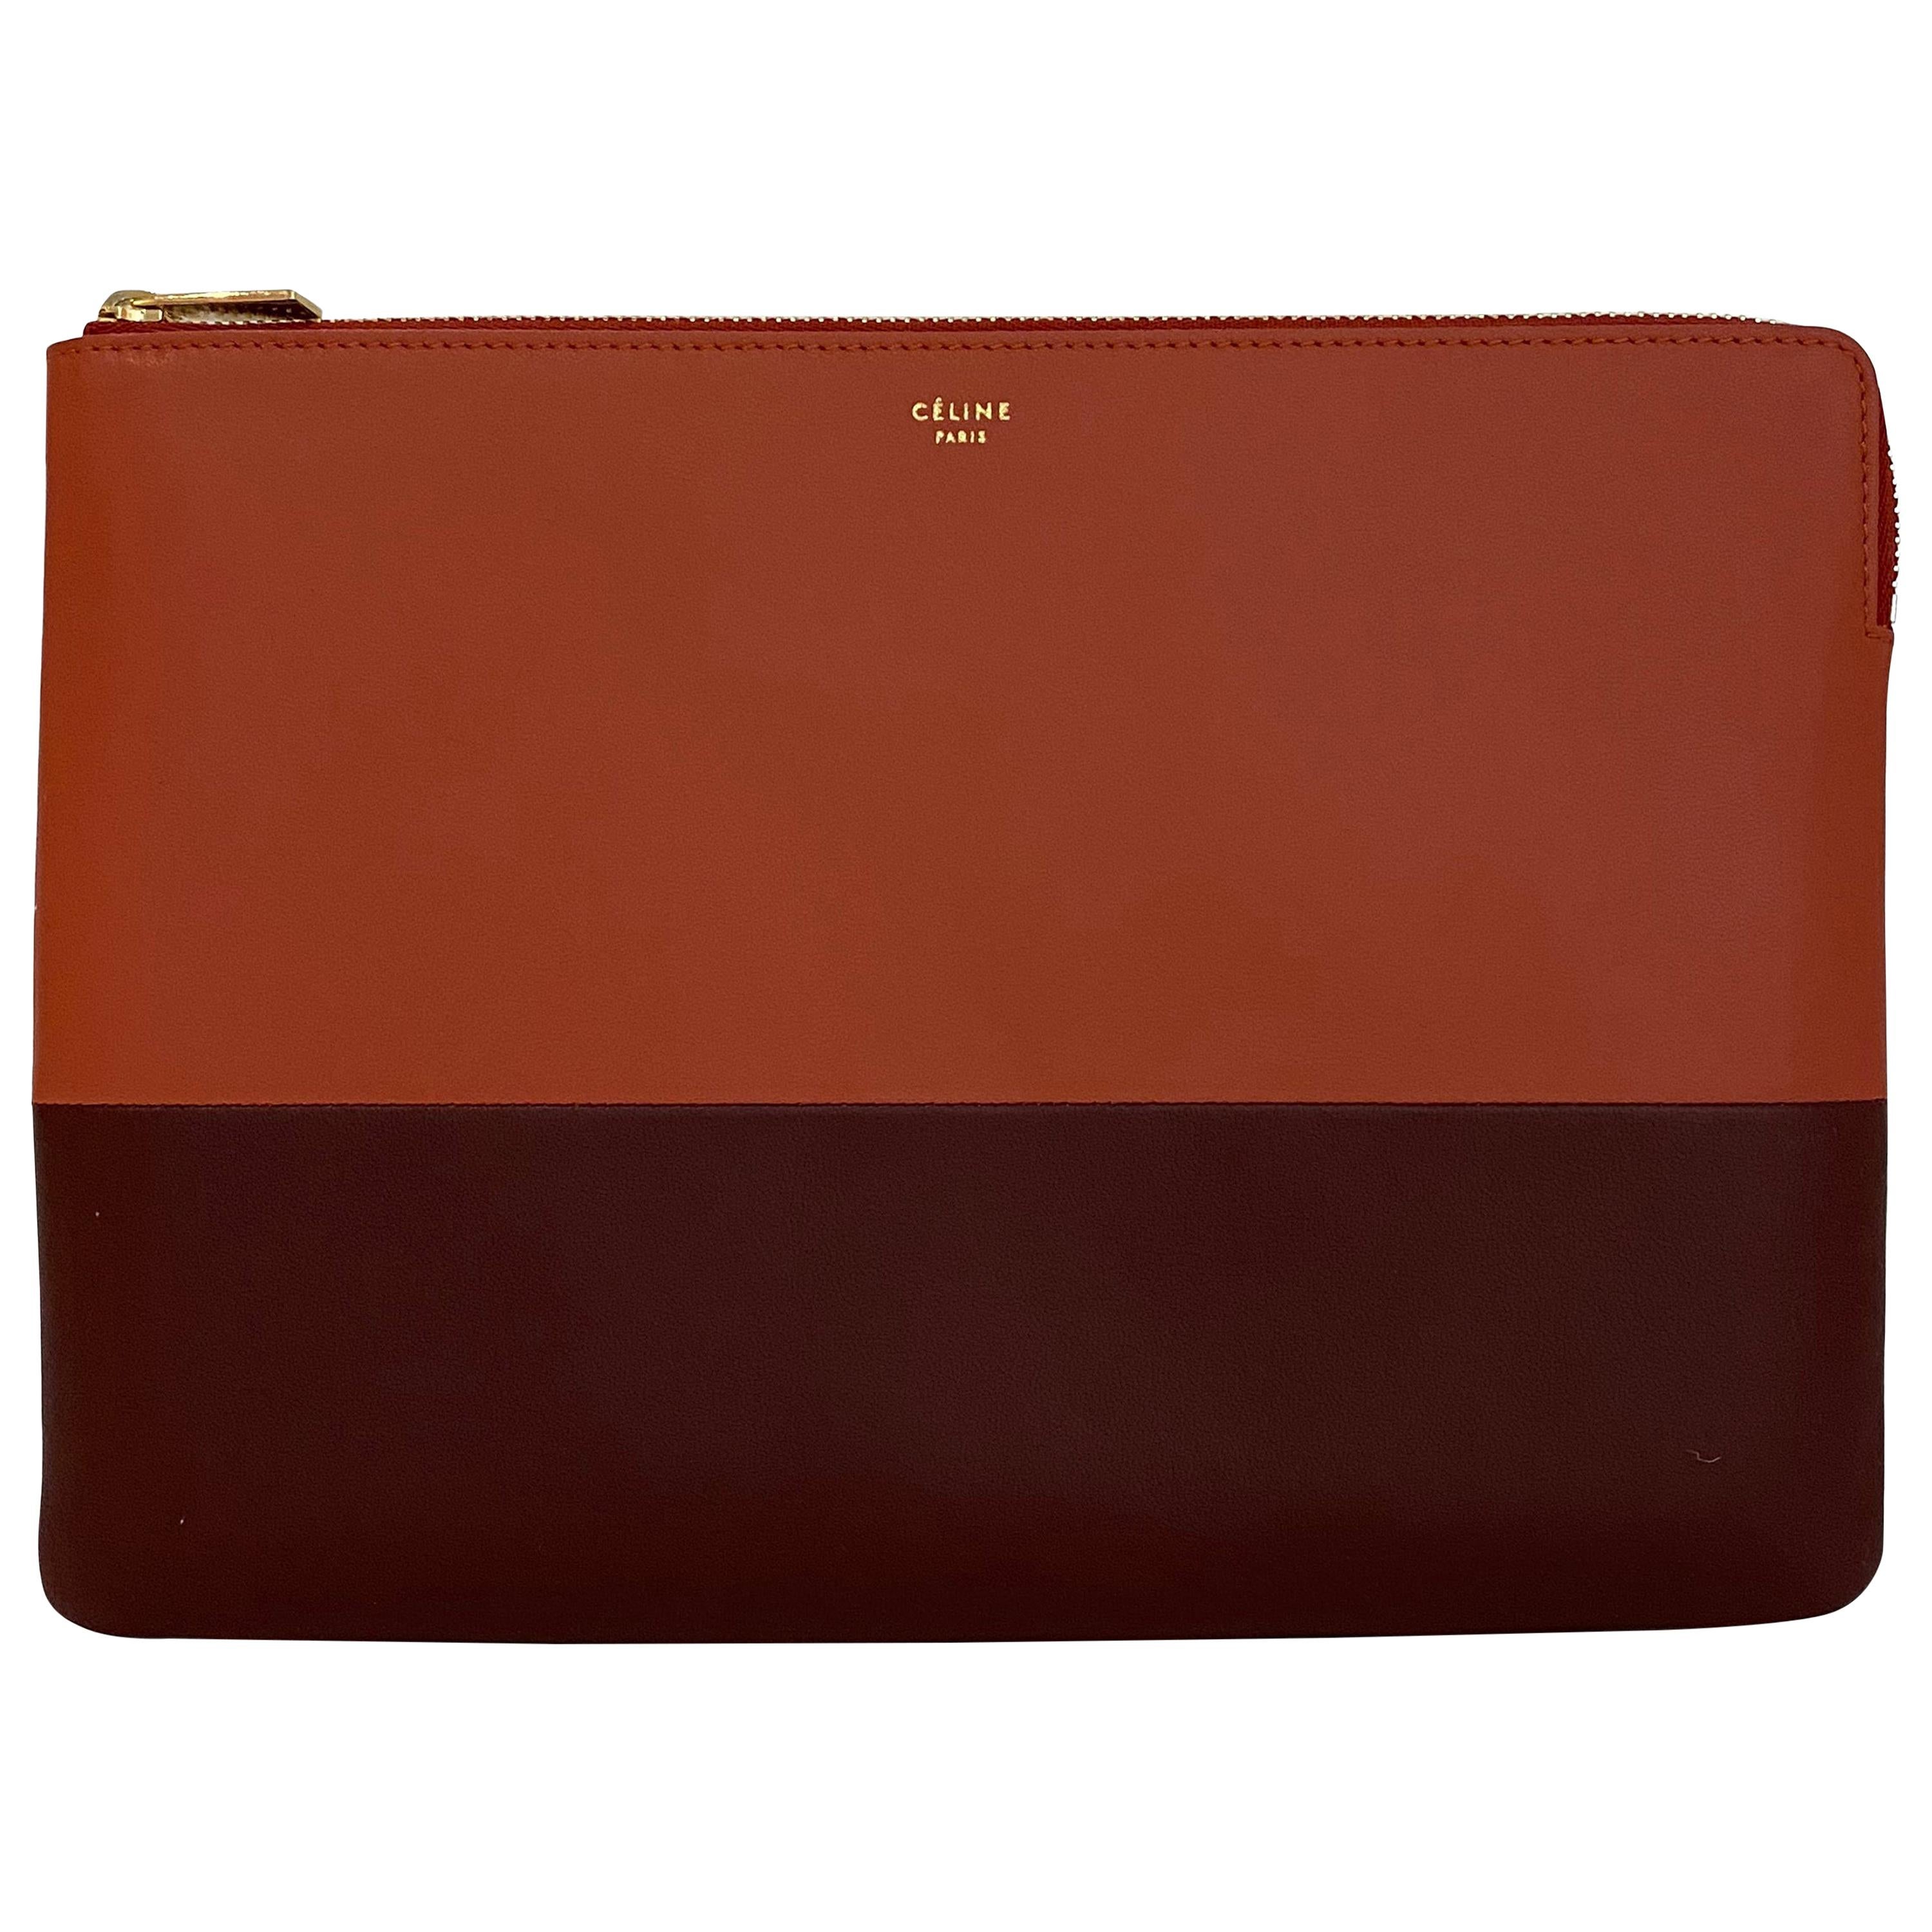 Celine Rust Bi-Color Lambskin Leather Solo Pouch Clutch Bag rt. $530